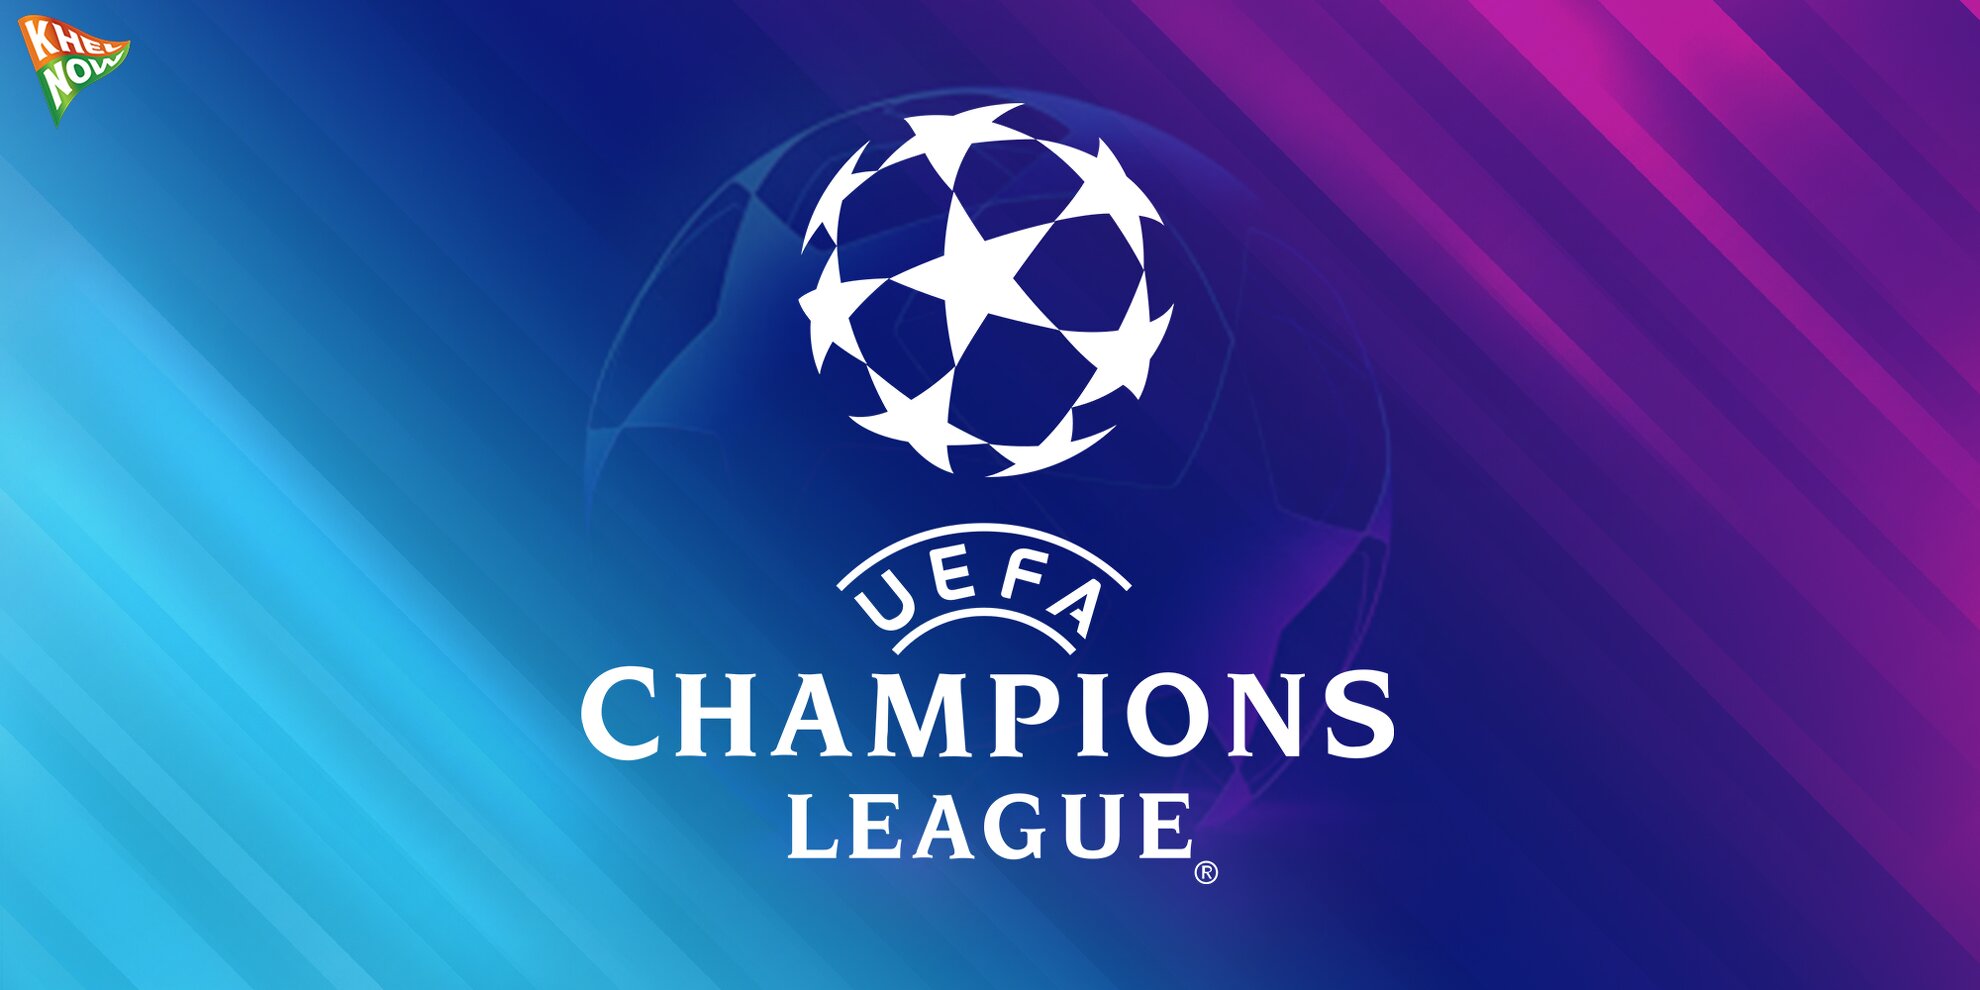 uefa champions league 2019 fixtures